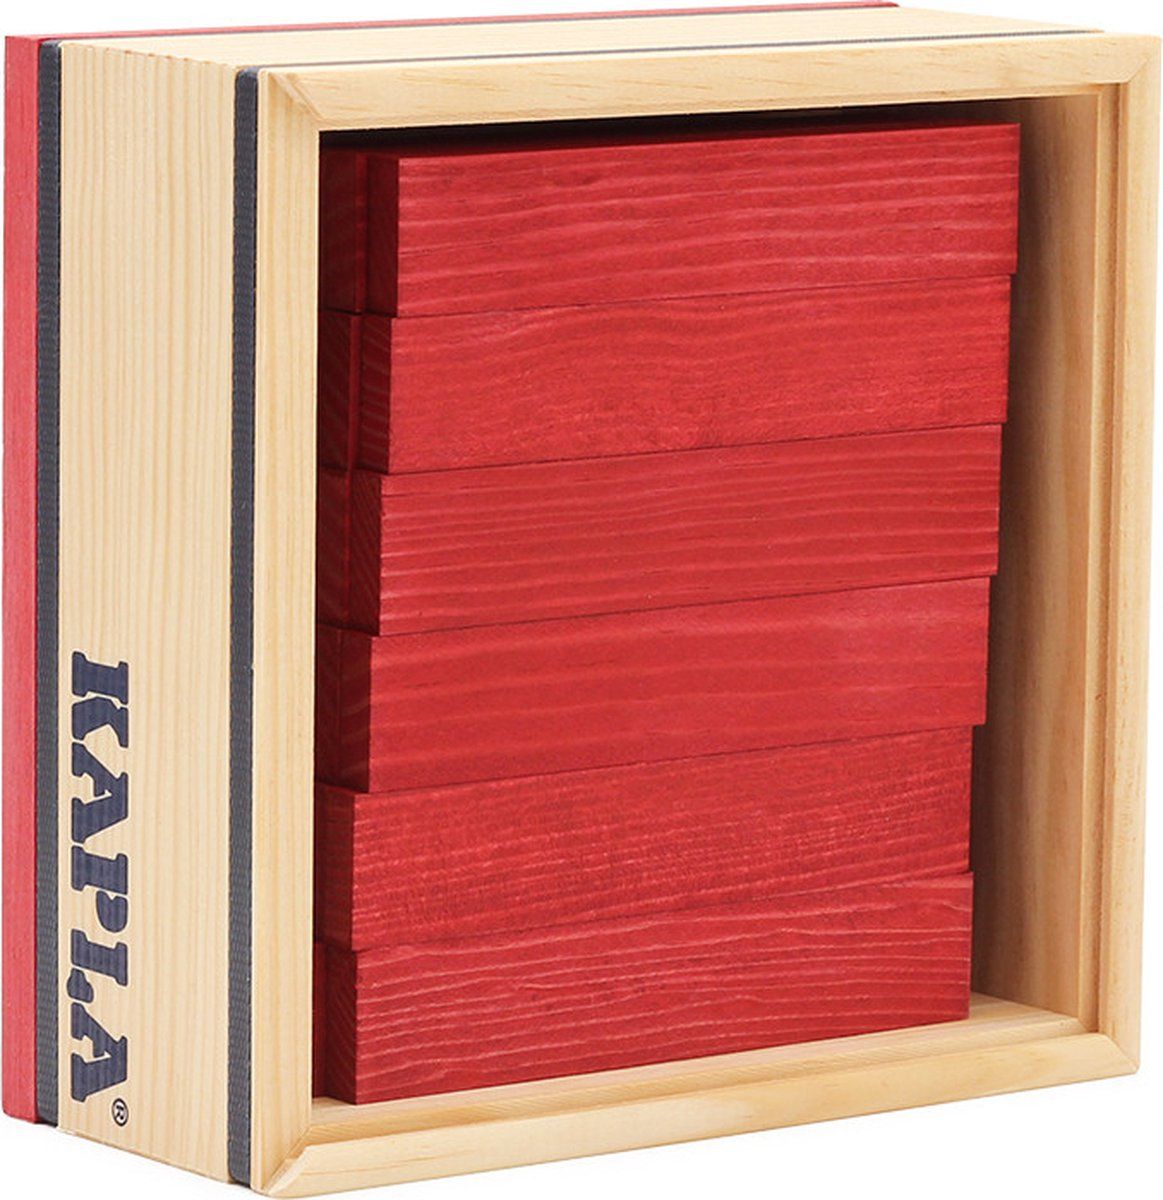 kapla-kapla-kleur-constructiespeelgoed-rood-40-plankjes